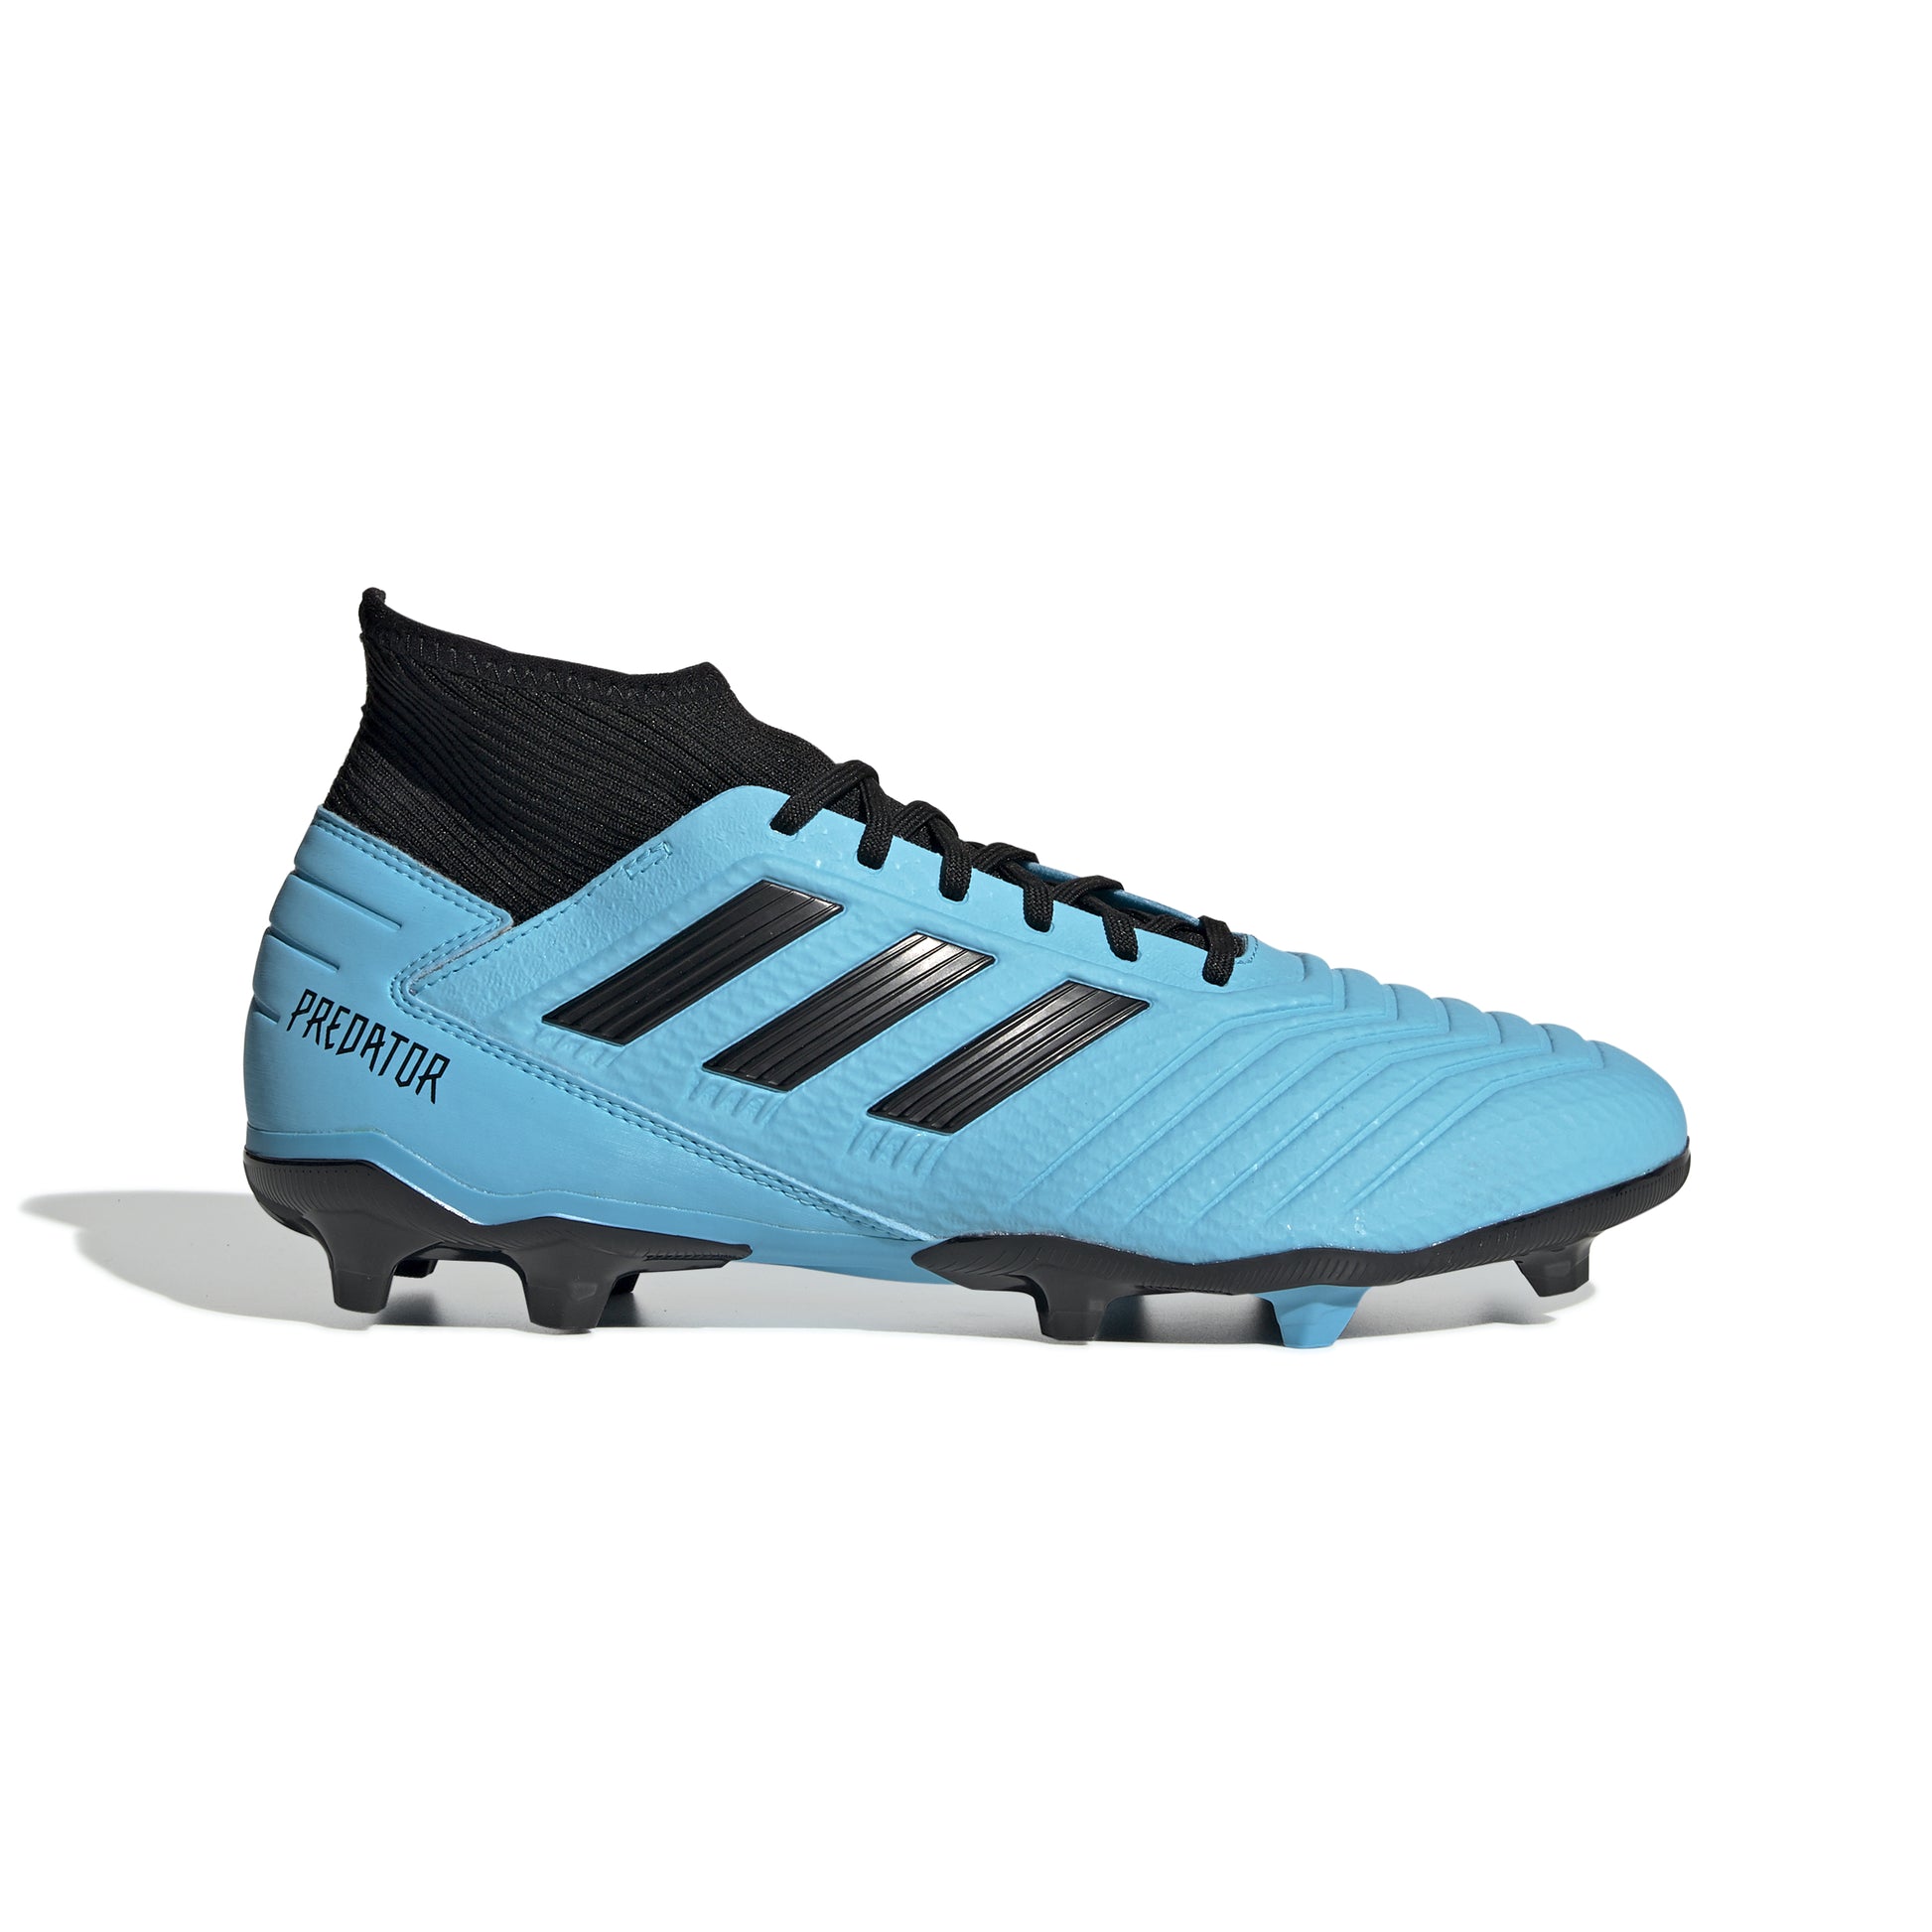 Adidas Predator 19.3 FG Football Boots - Cyan - Queensferry Sports